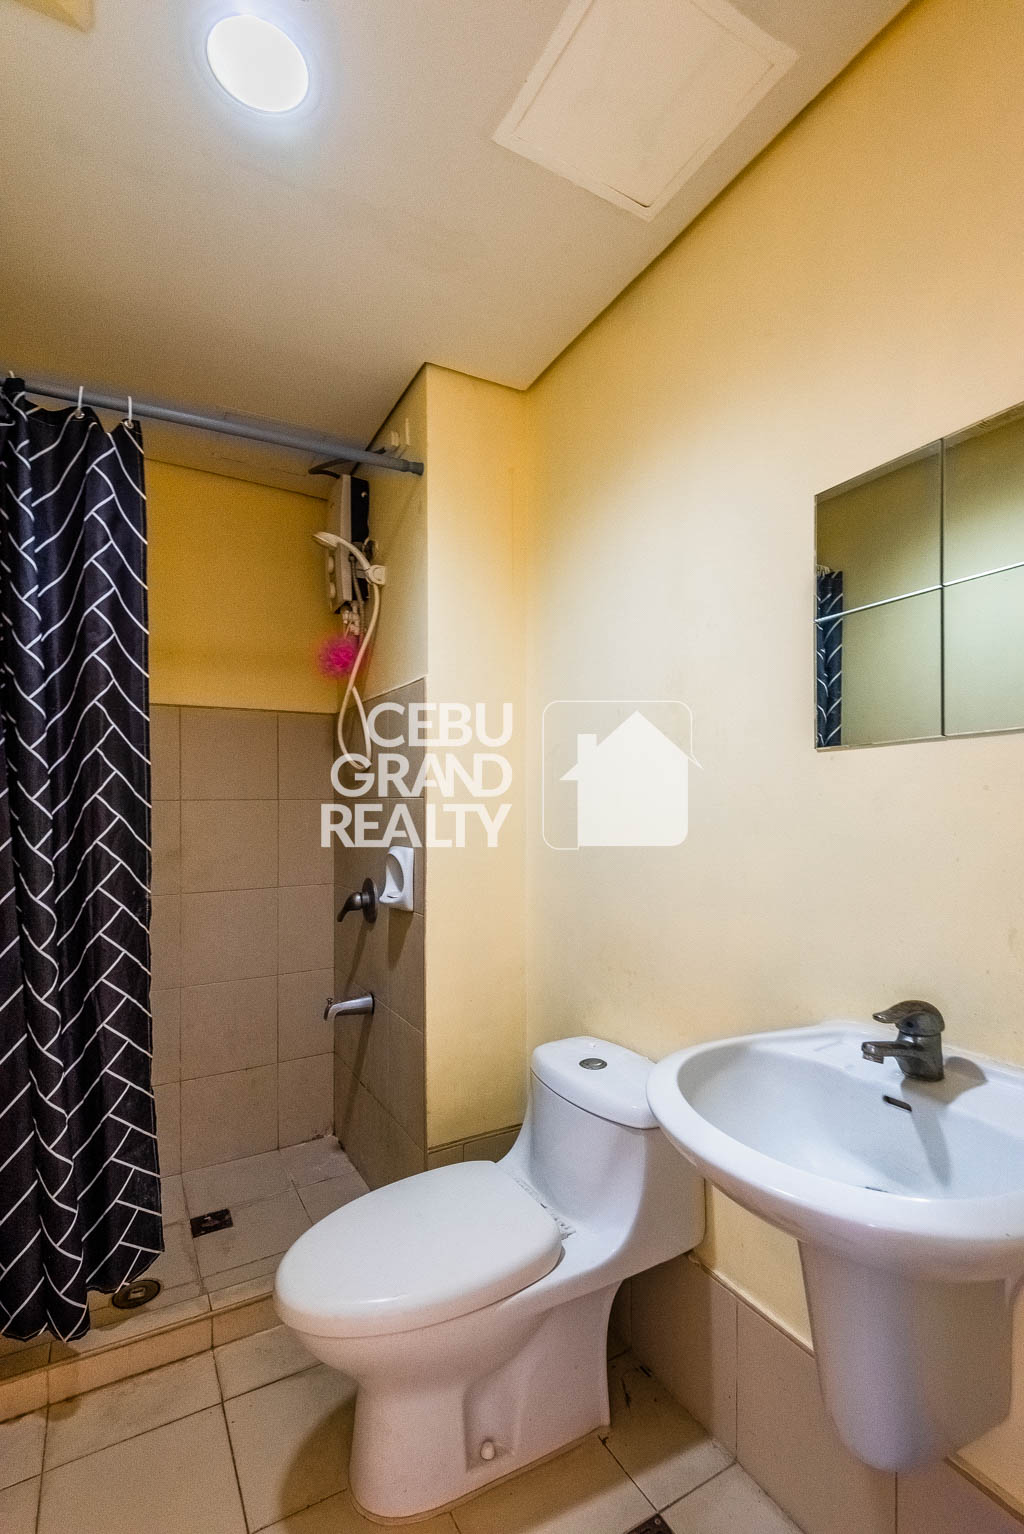 RCAT2 1 Bedroom Condo for Rent in Cebu Avida Tower - 6